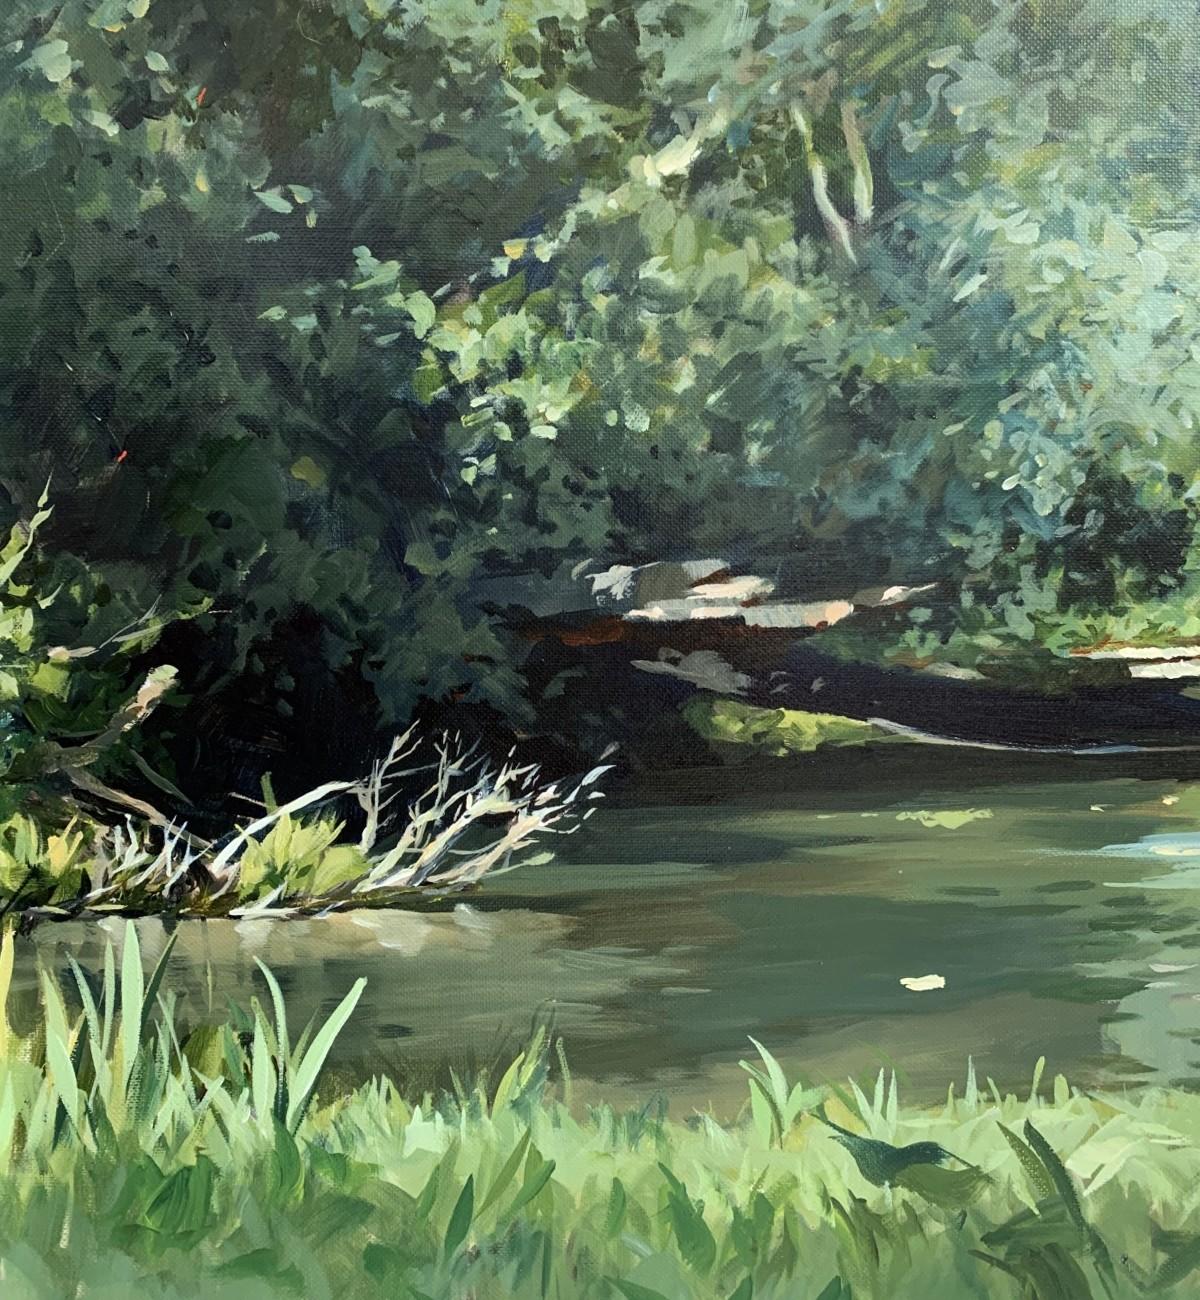 Warta river bend - Waterscape Landscape Oil Painting, Realistic, Polish artist - Gray Figurative Painting by Janusz Szpyt